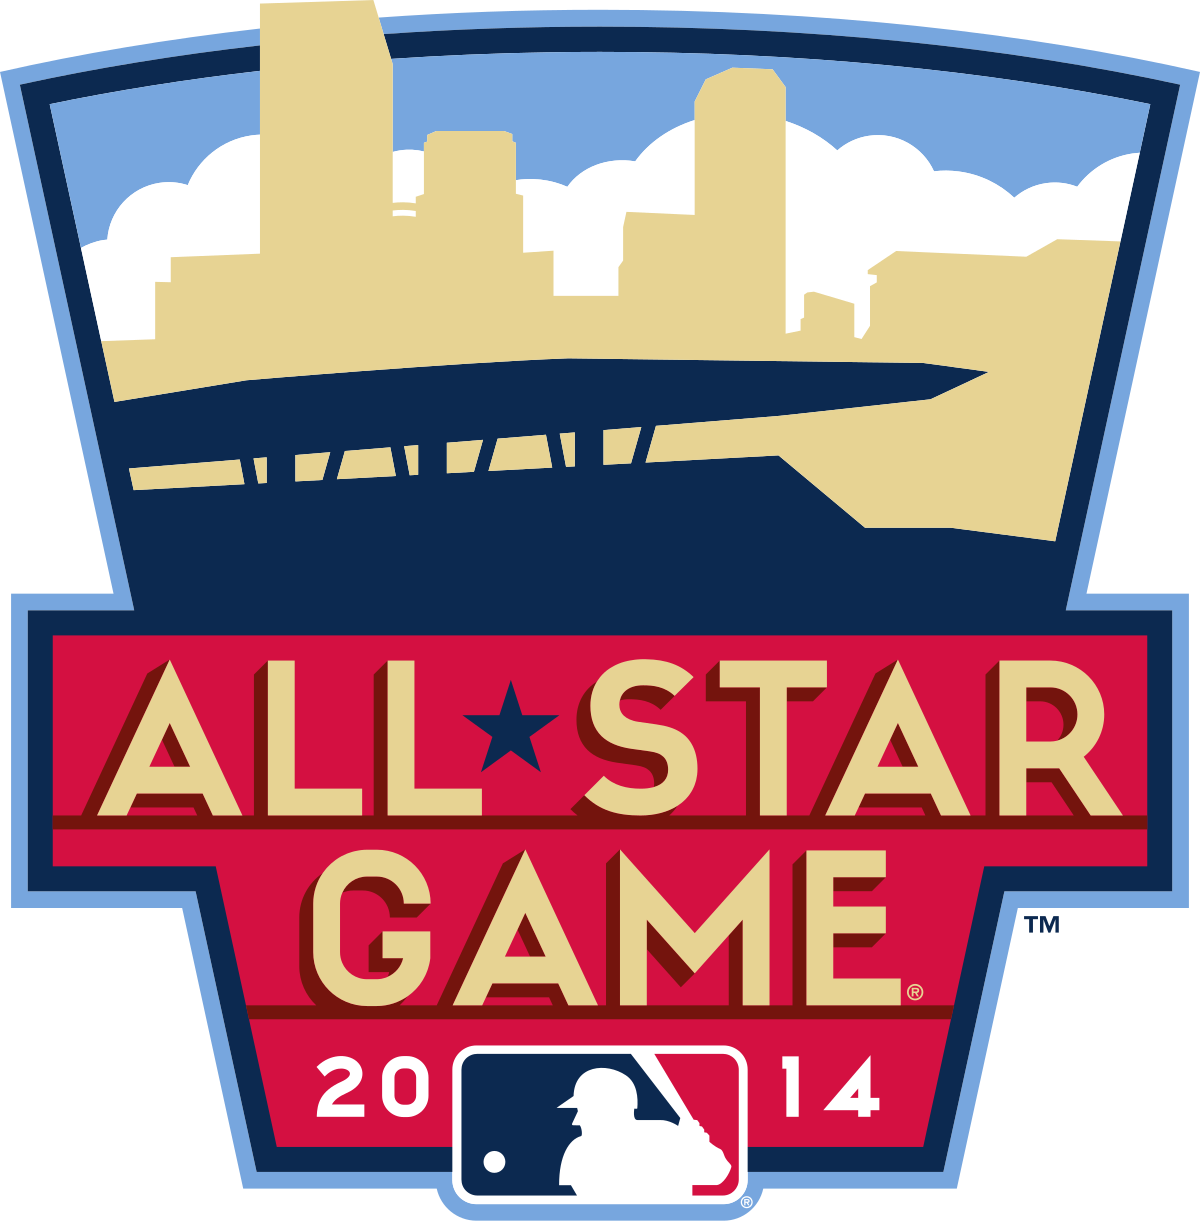 2014 Major League Baseball All-Star Game - Wikipedia